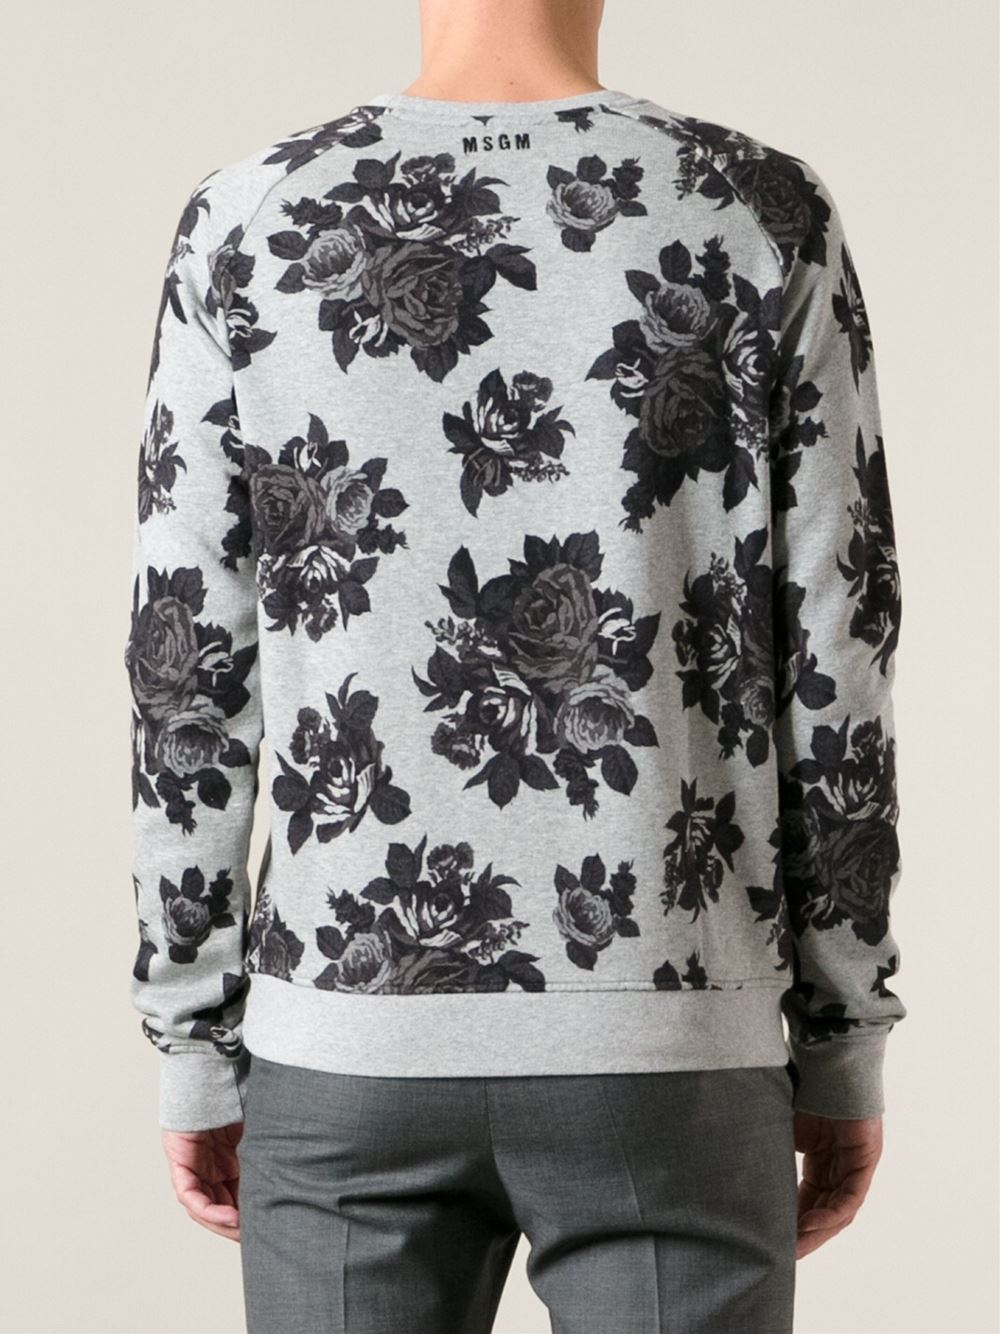 MSGM Rose Print Sweatshirt in Grey (Gray) for Men - Lyst